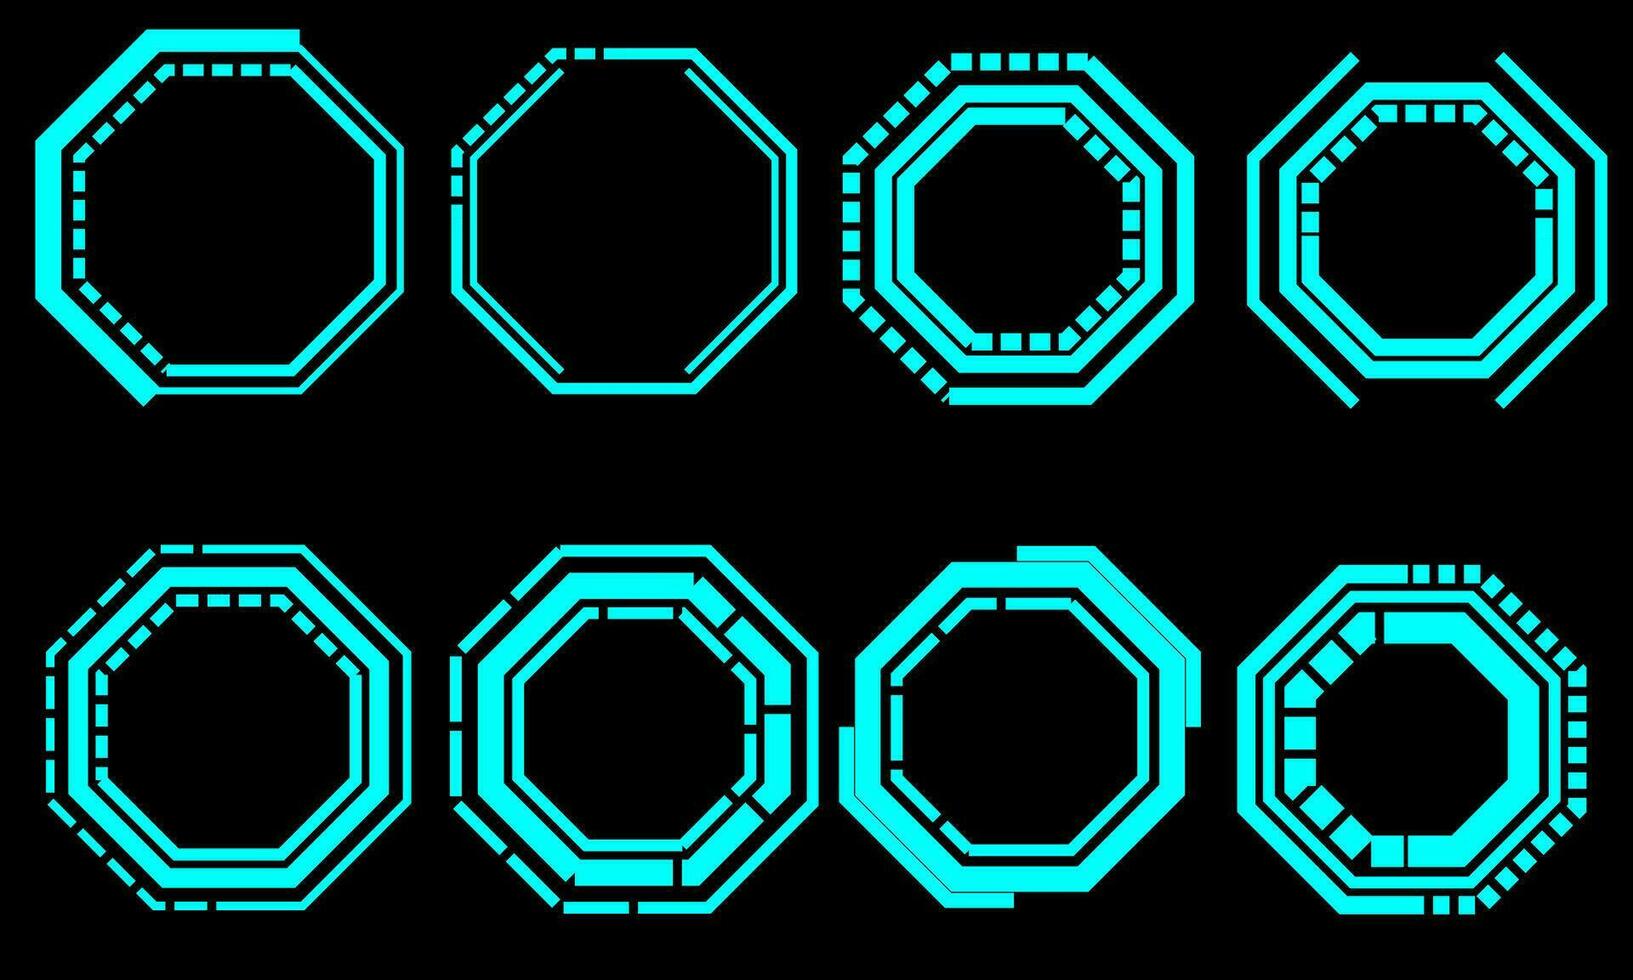 conjunto de hud octágono moderno usuario interfaz elementos diseño tecnología ciber azul en negro futurista vector